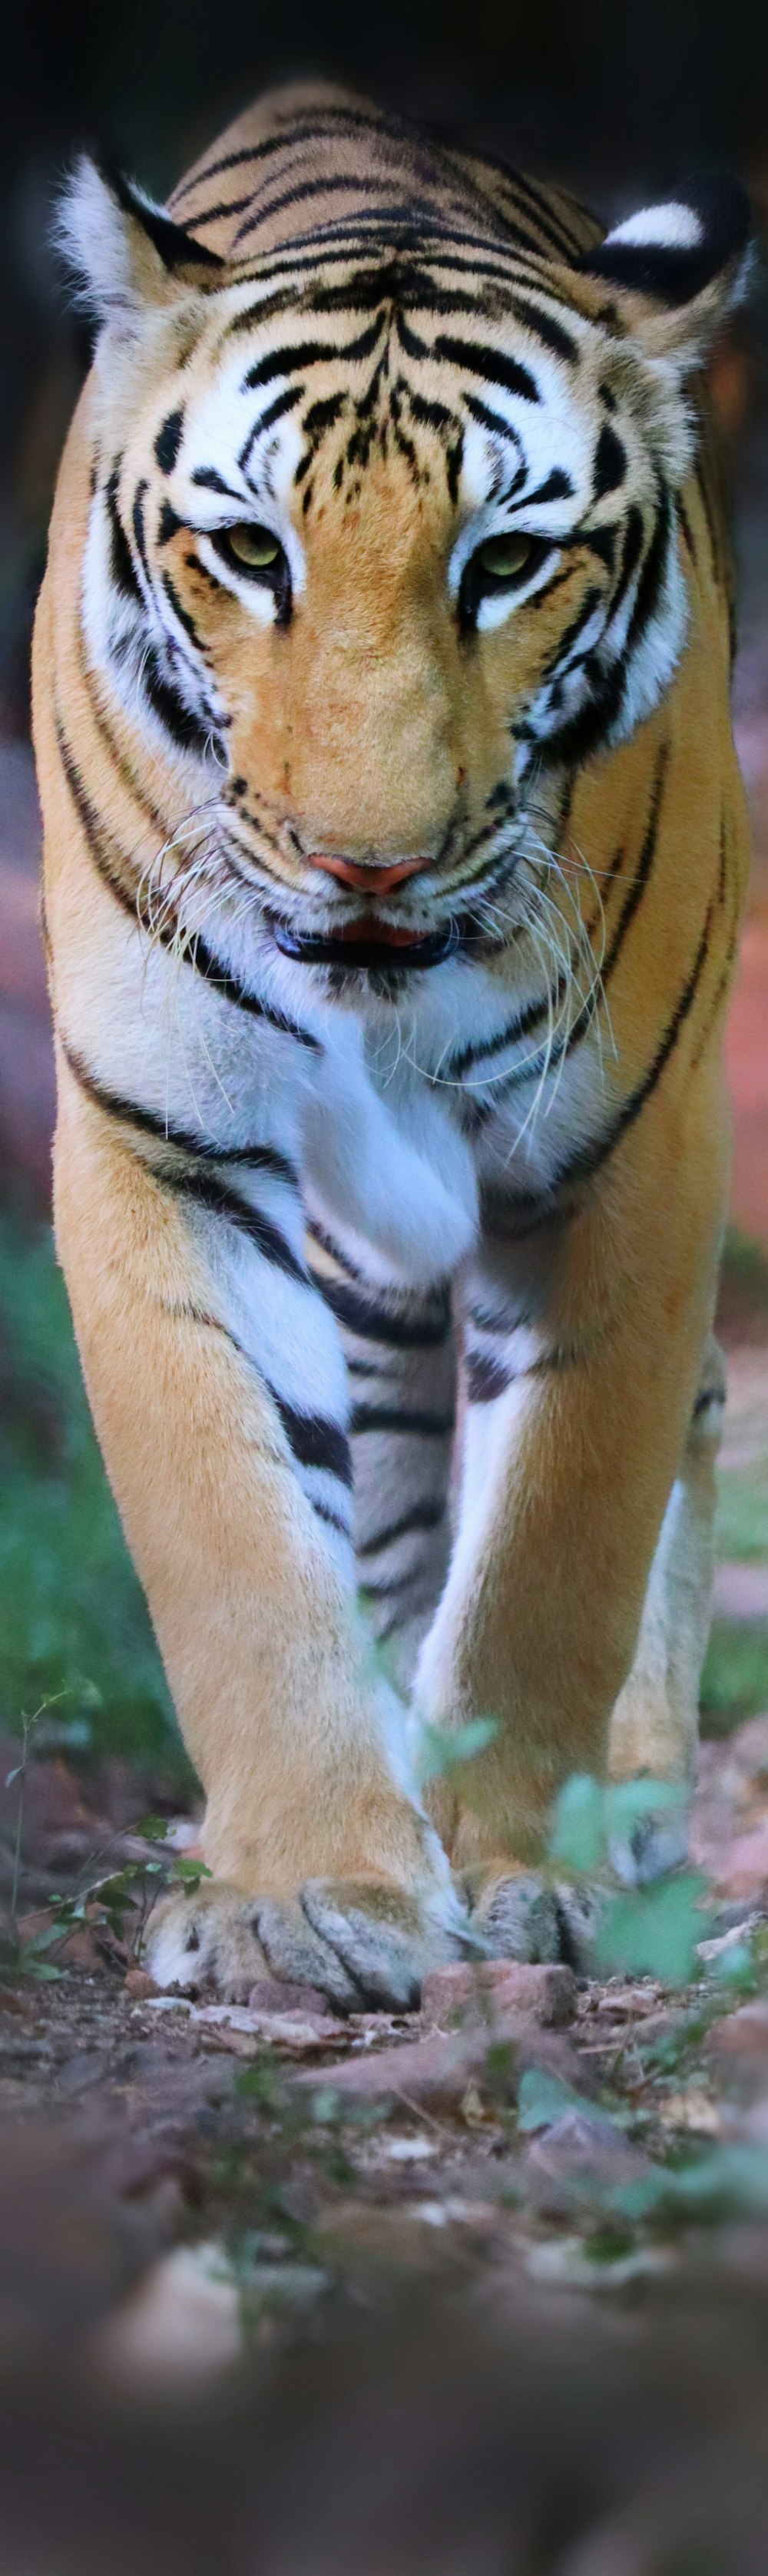 a large tiger walking across a lush green field